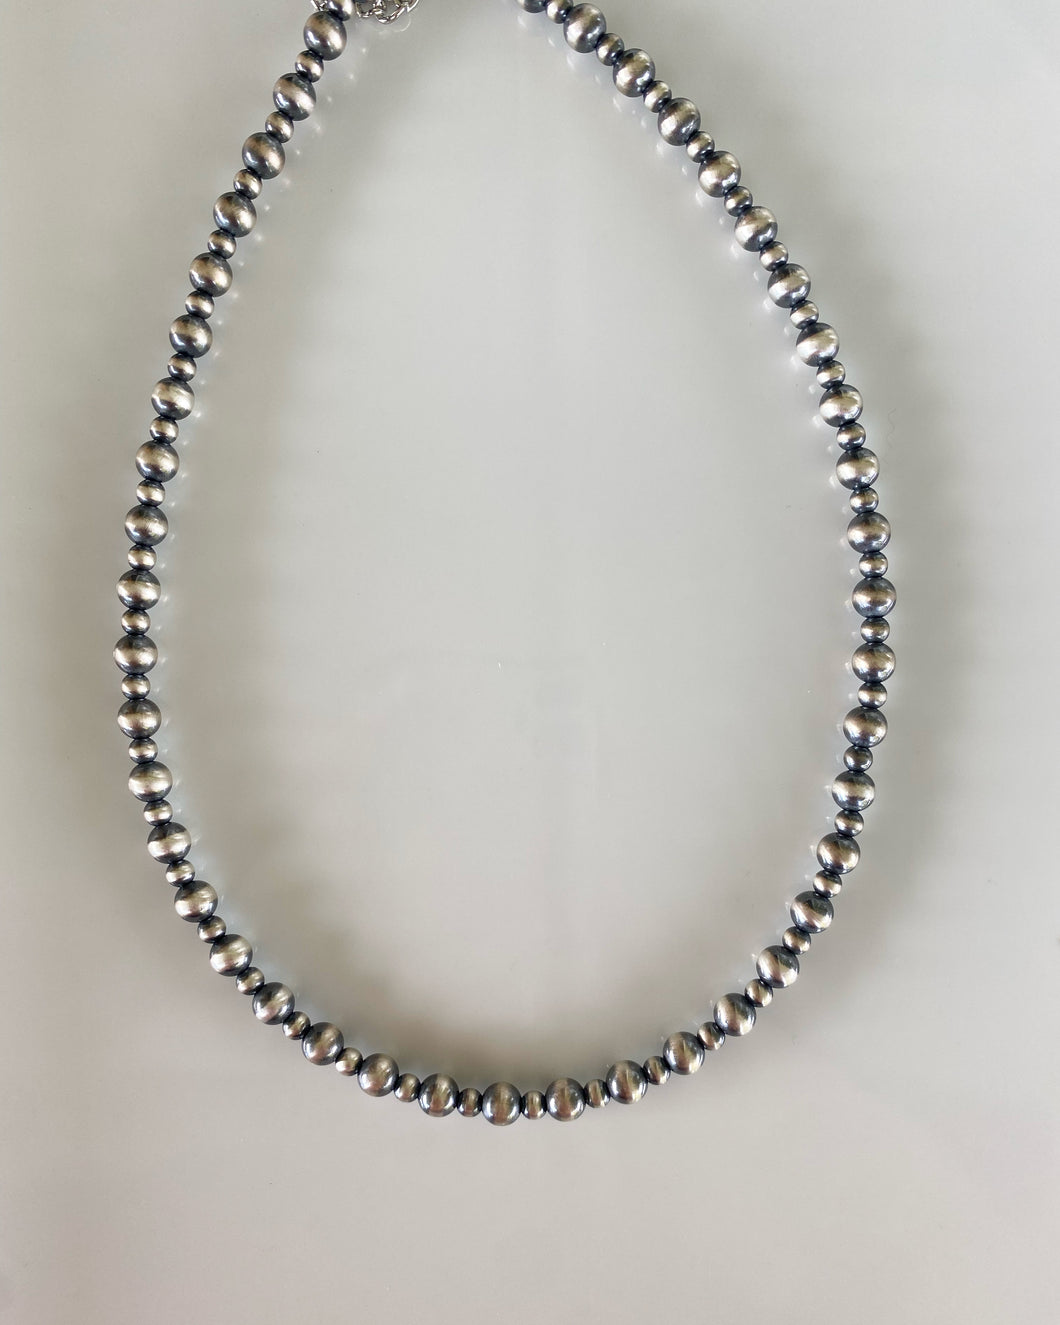 4/6mm Navajo pearls